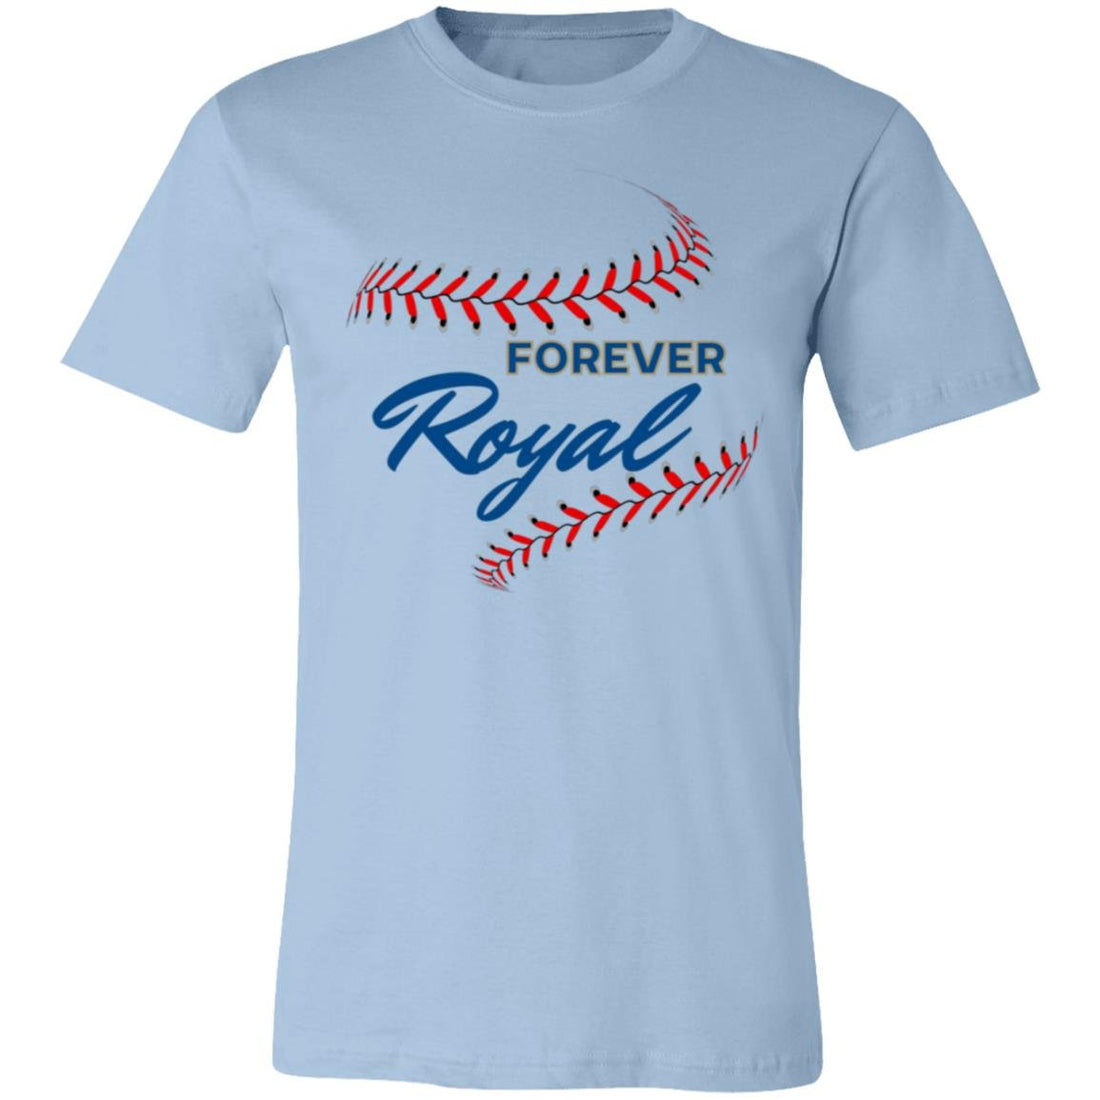 Forever Royal Short-Sleeve T-Shirt - T-Shirts - Positively Sassy - Forever Royal Short-Sleeve T-Shirt